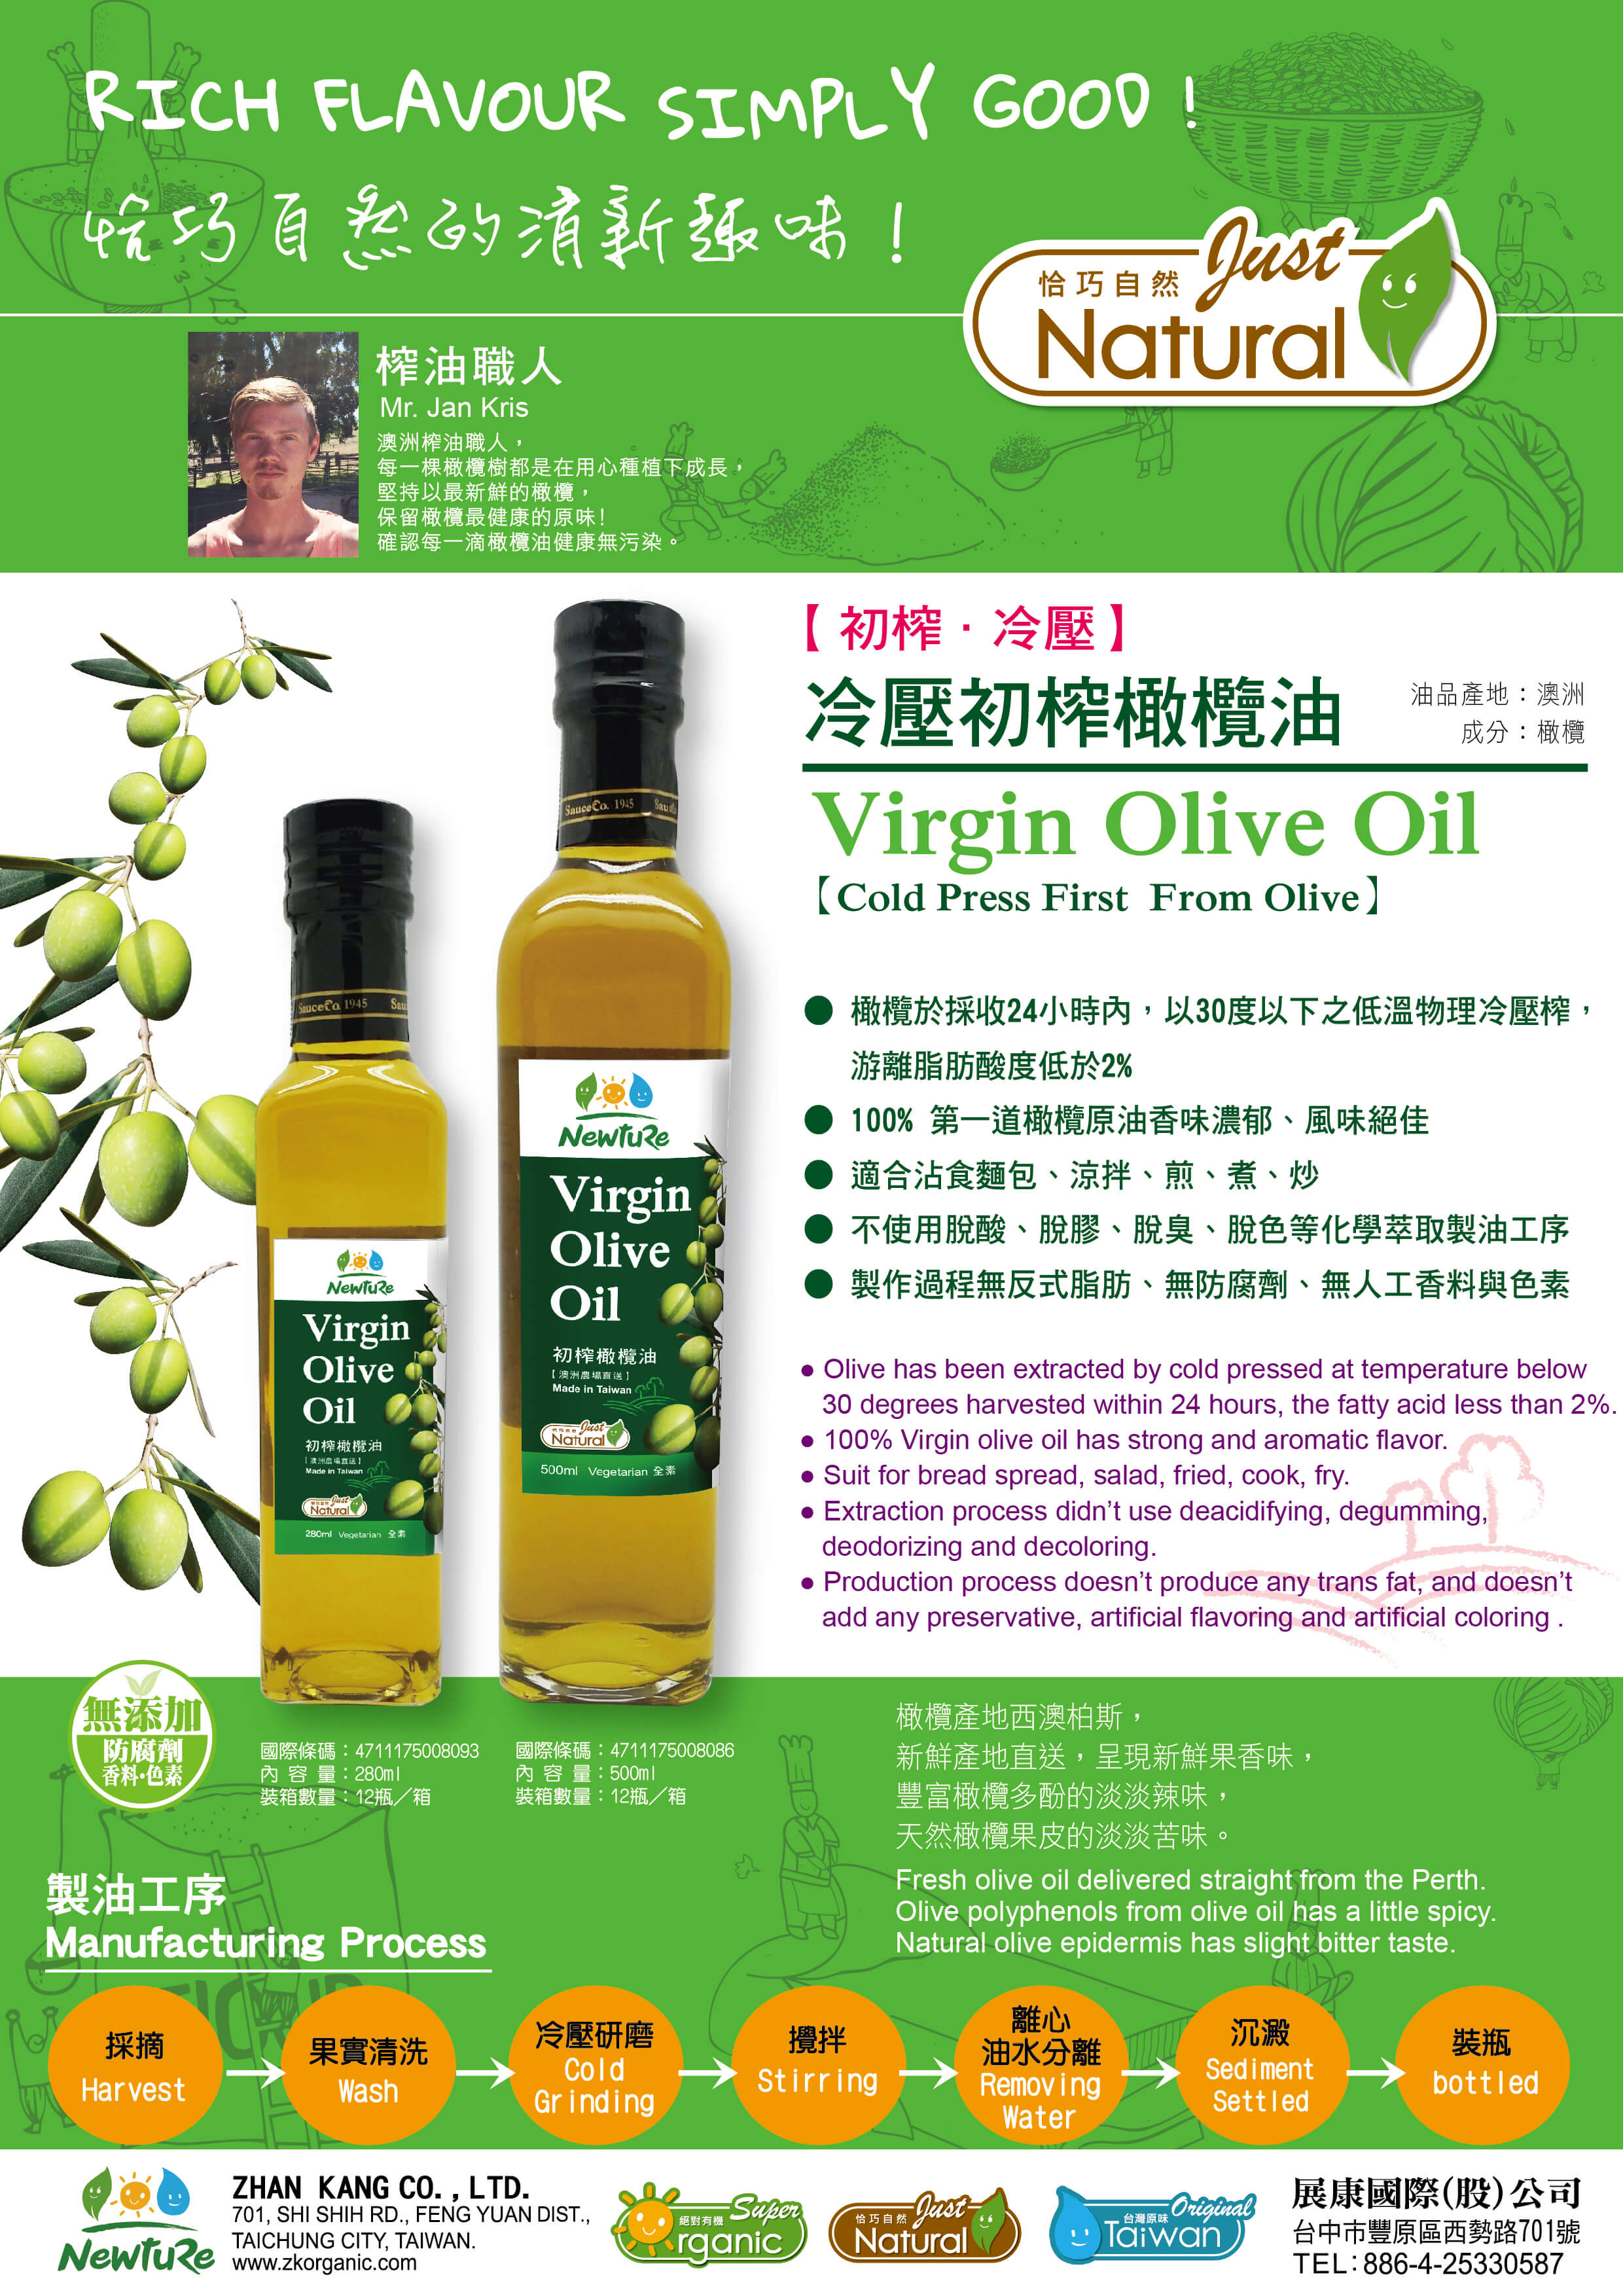 Zhankang cold pressed virgin olive oil